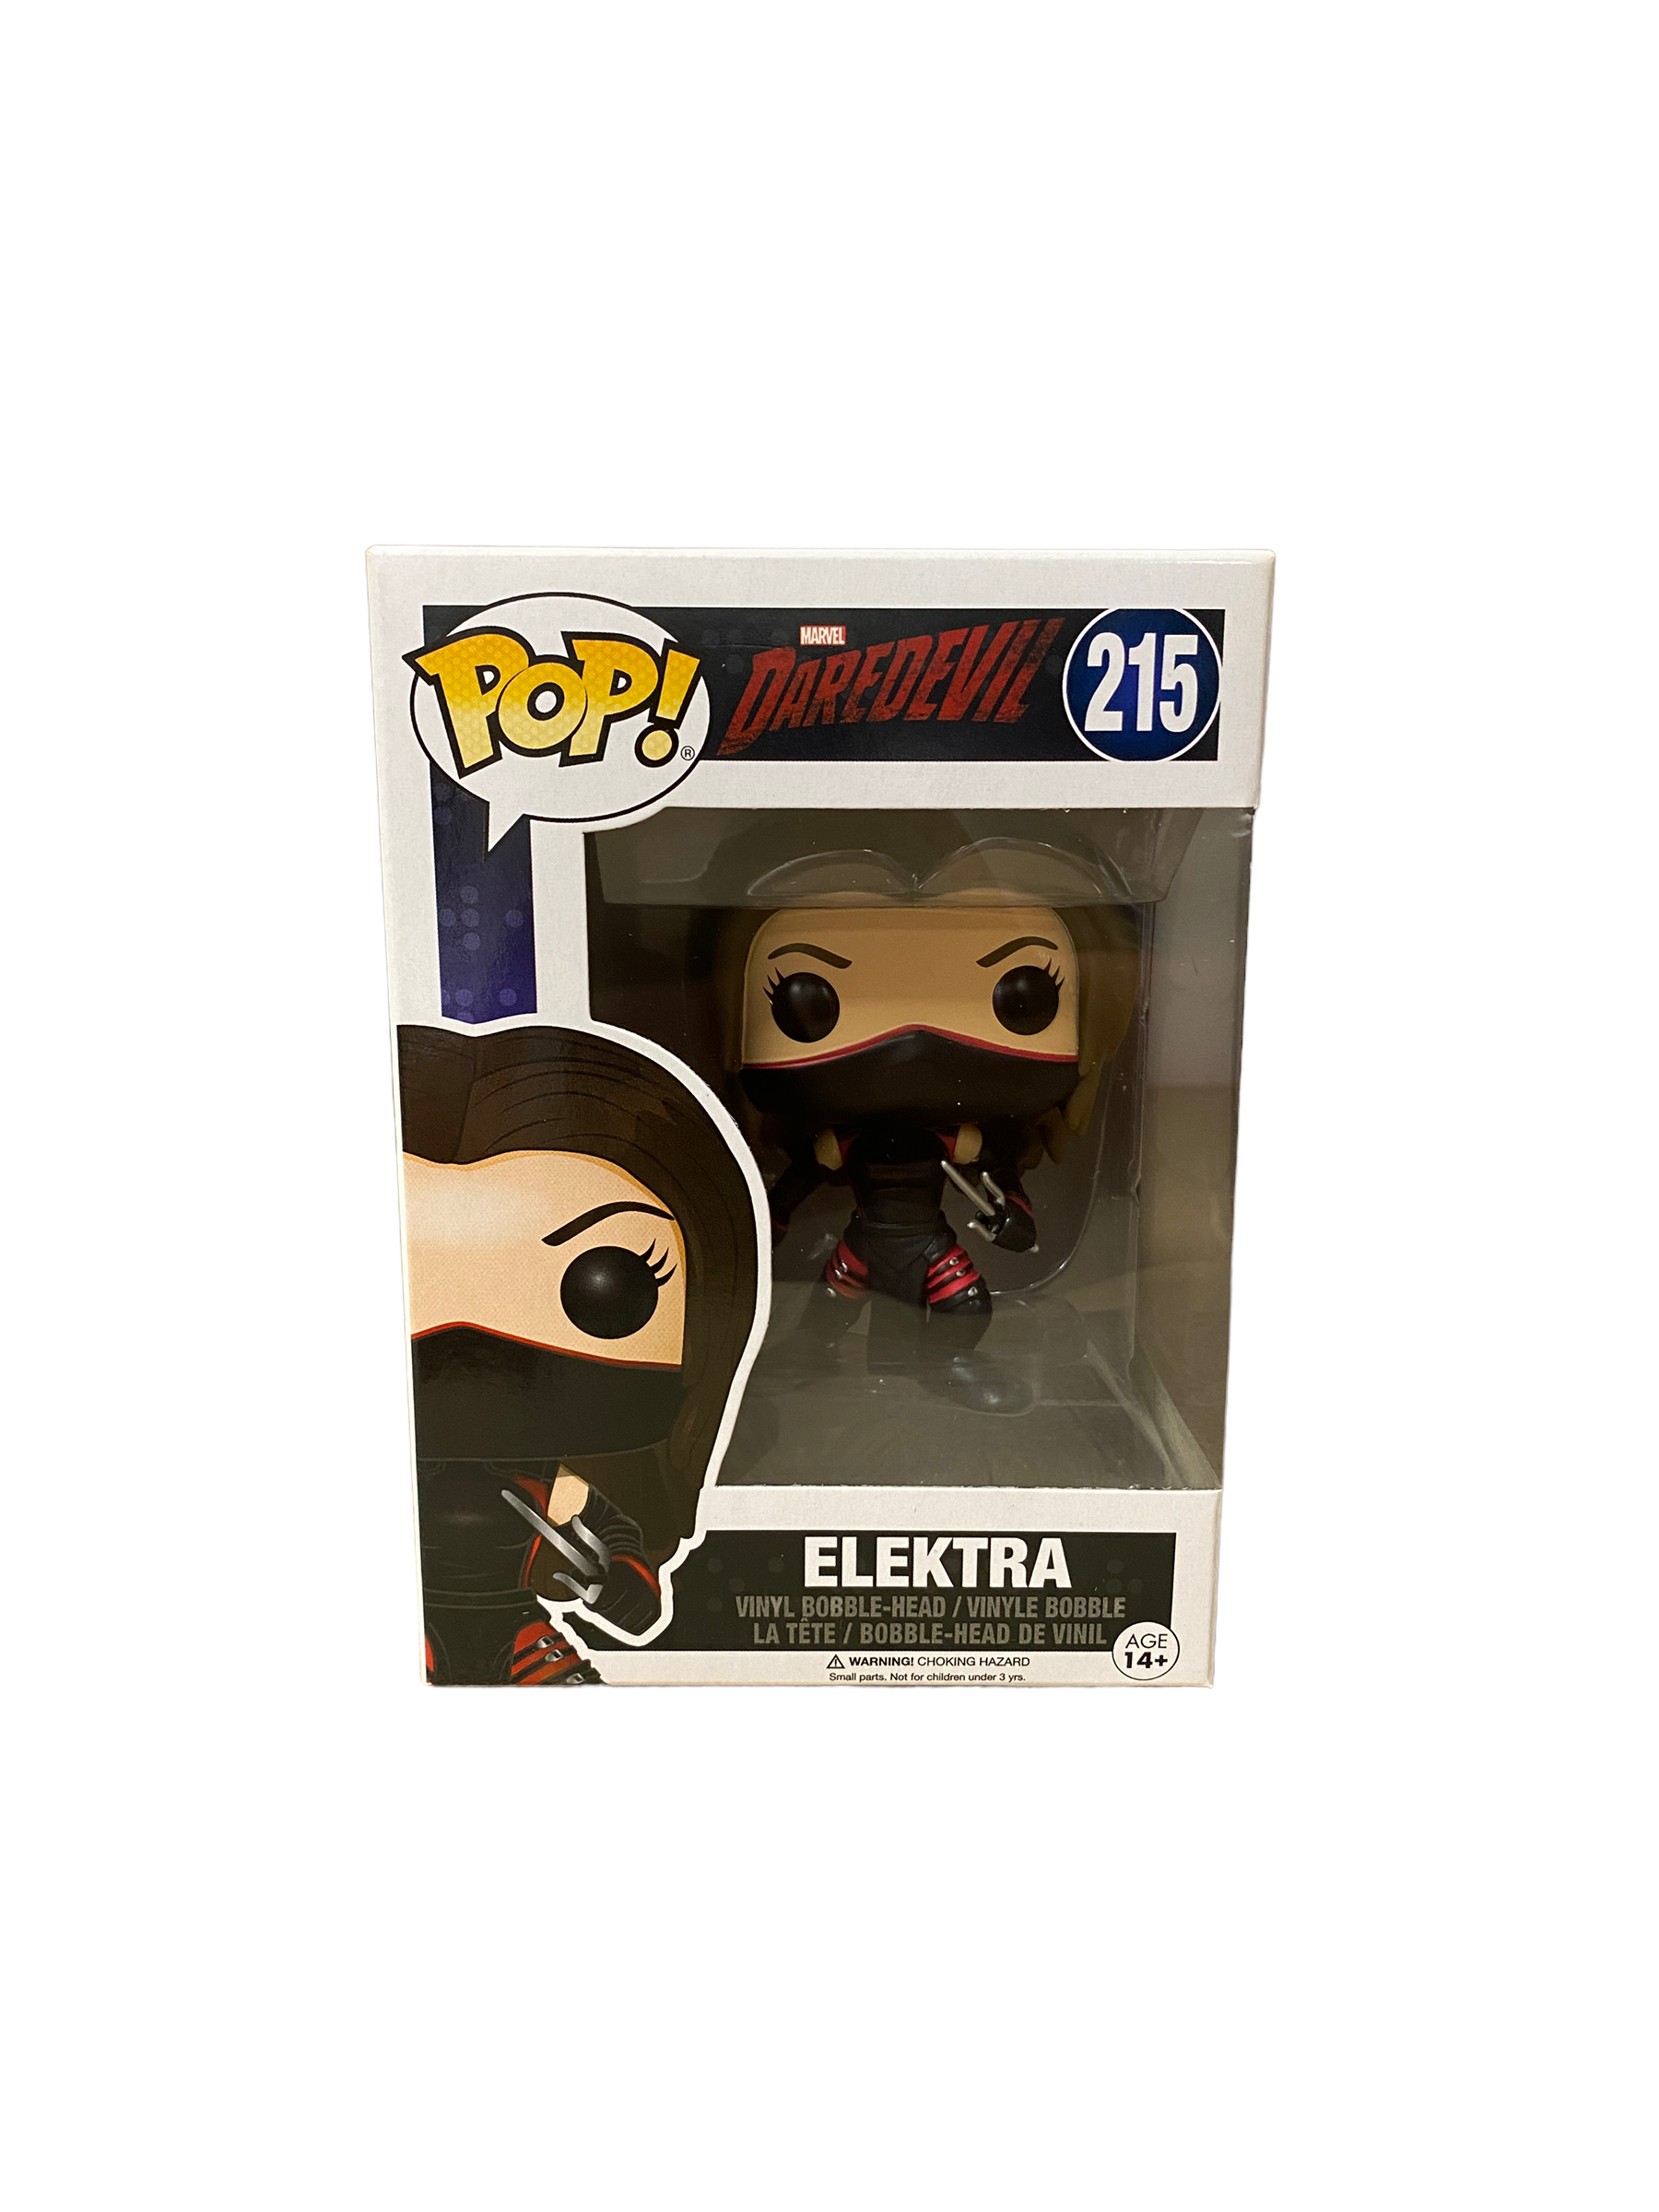 Elektra #215 Funko Pop! - Daredevil - 2017 Pop! - Condition 9/10